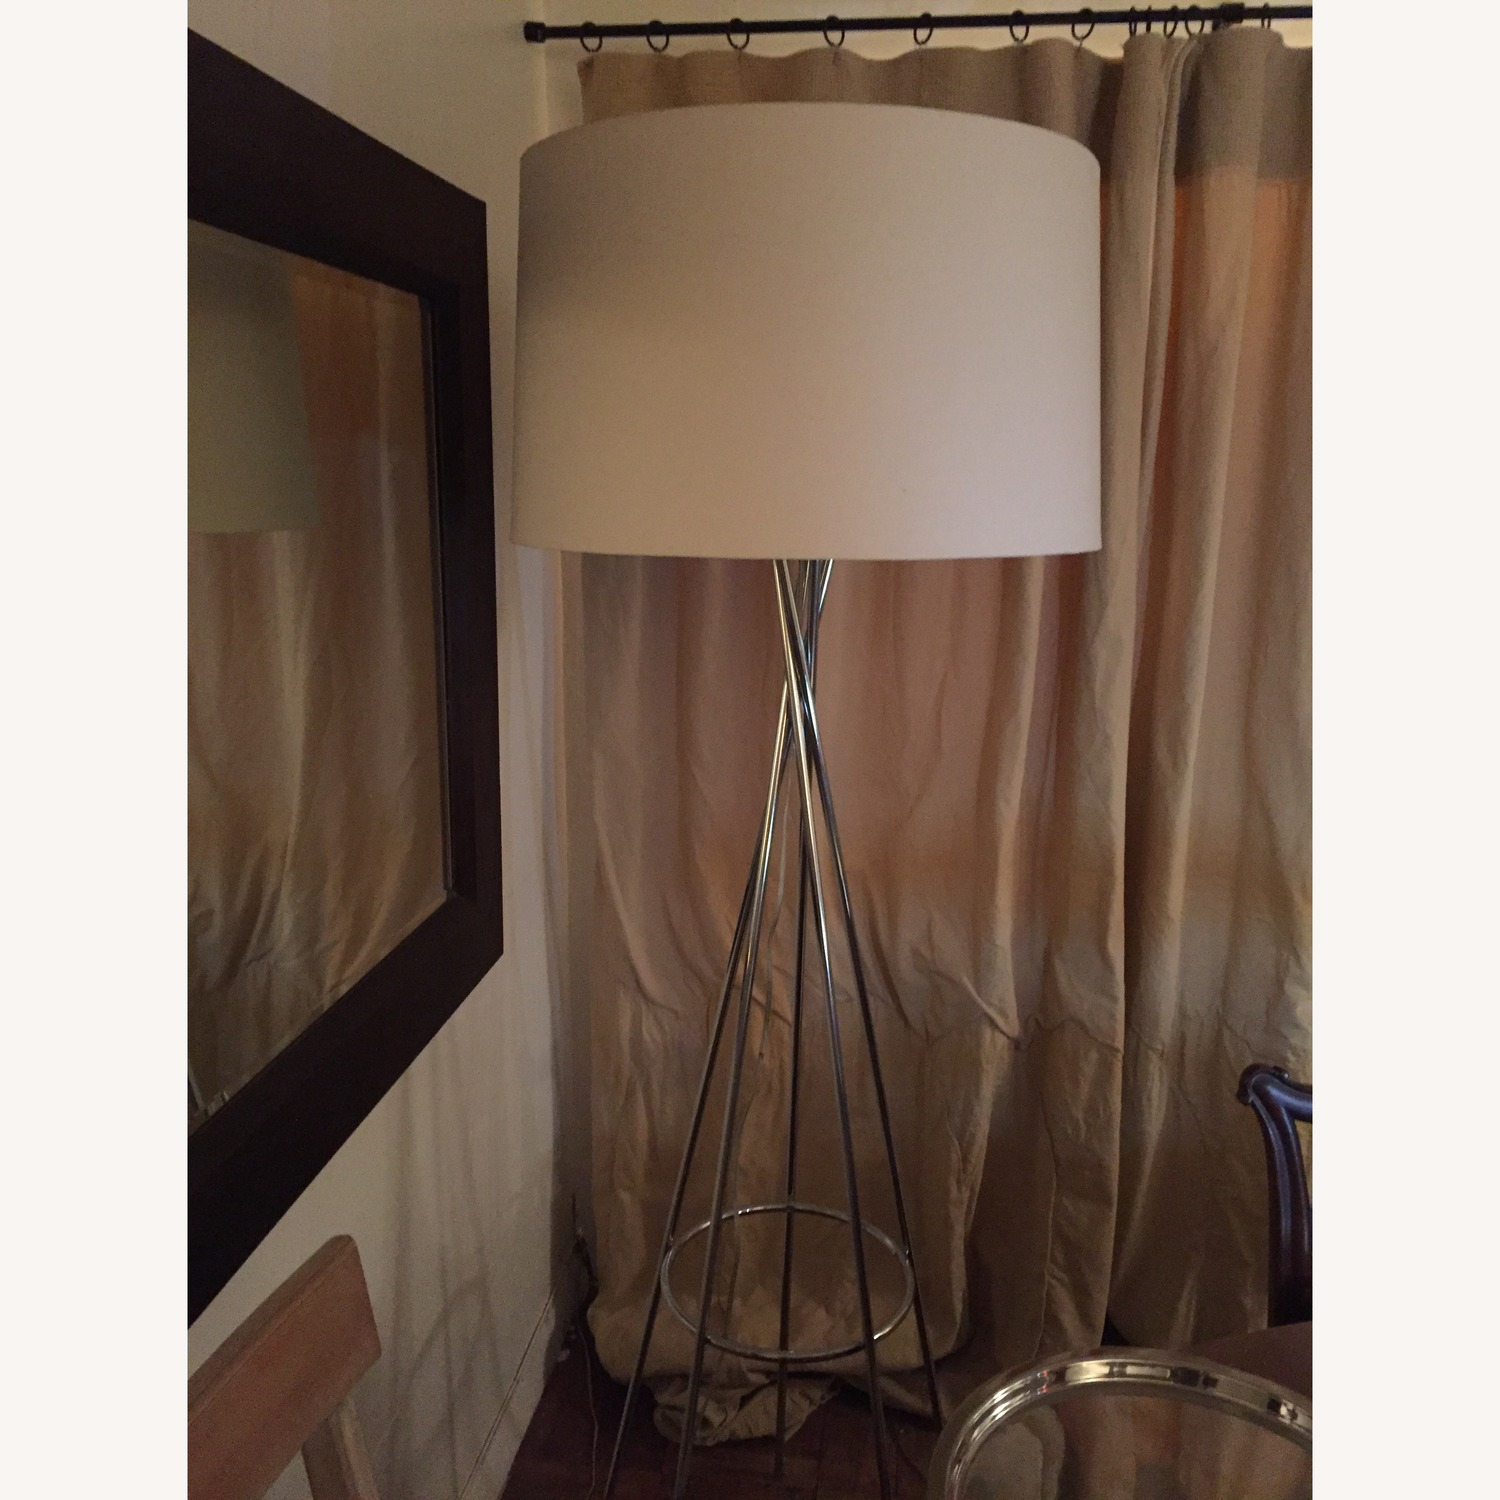 Cb2 Modern Classic Floor Lamp inside sizing 1500 X 1500